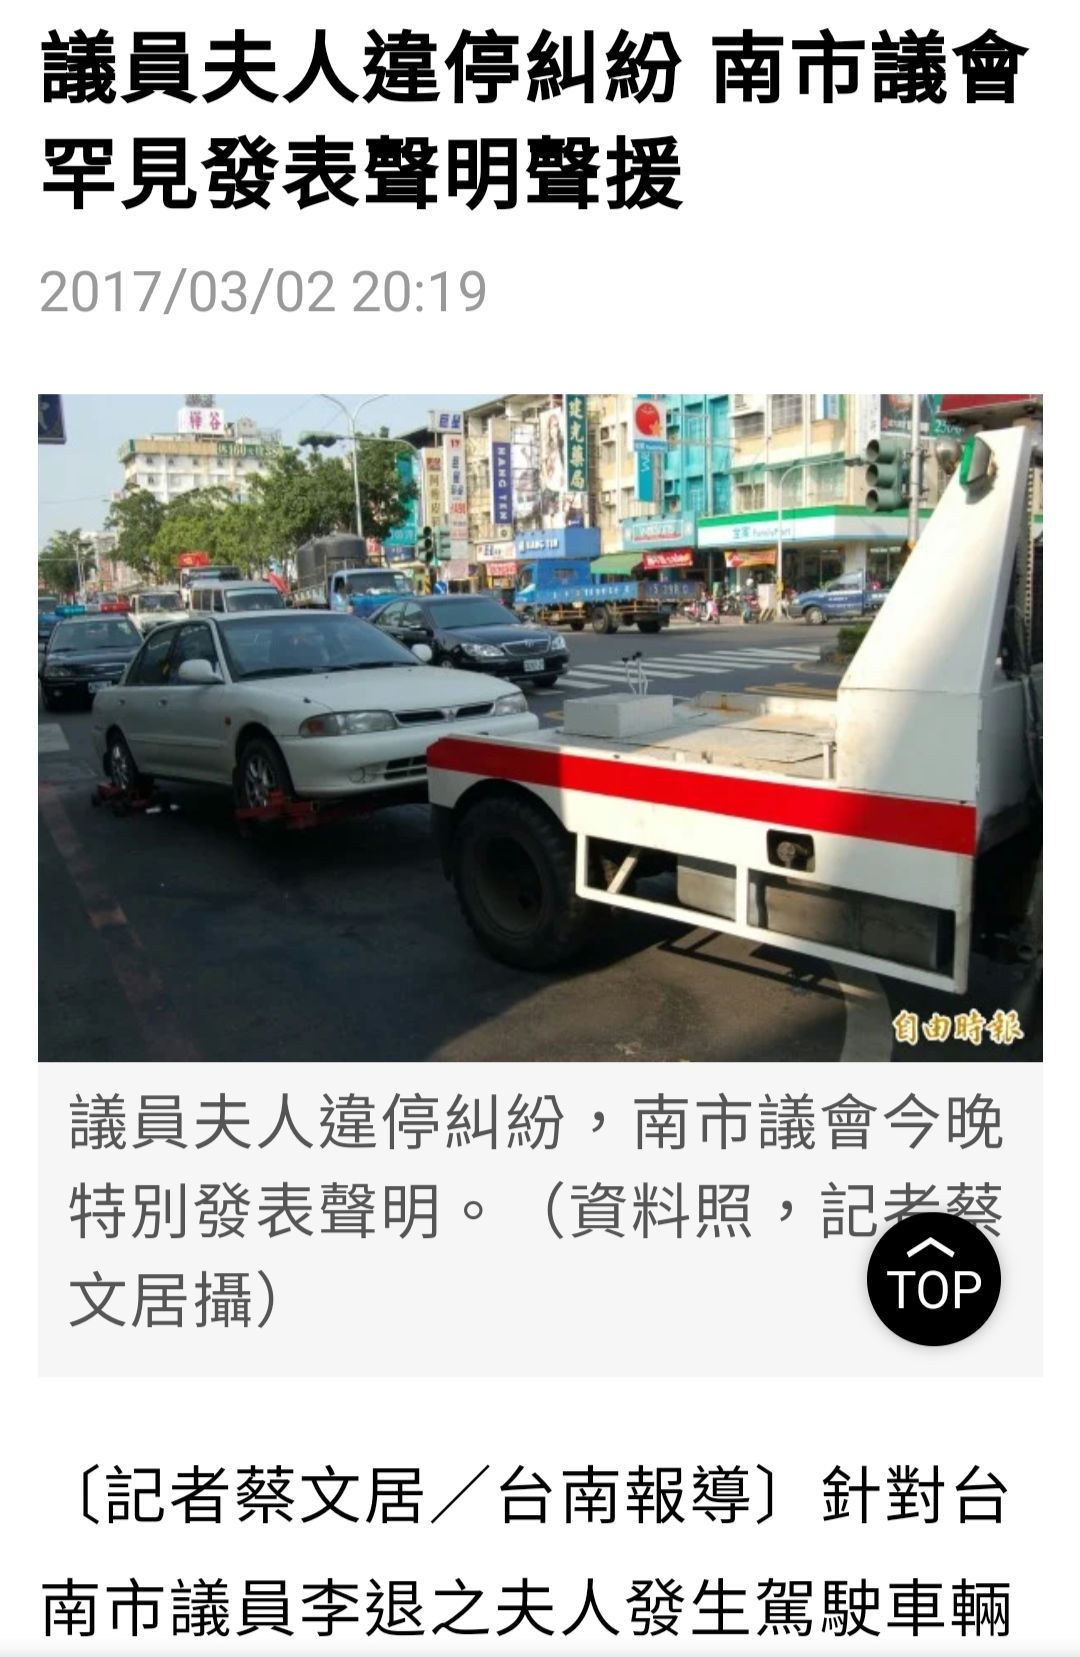 Re: [新聞] 交通死傷多...市長黃偉哲：議員會刪預算